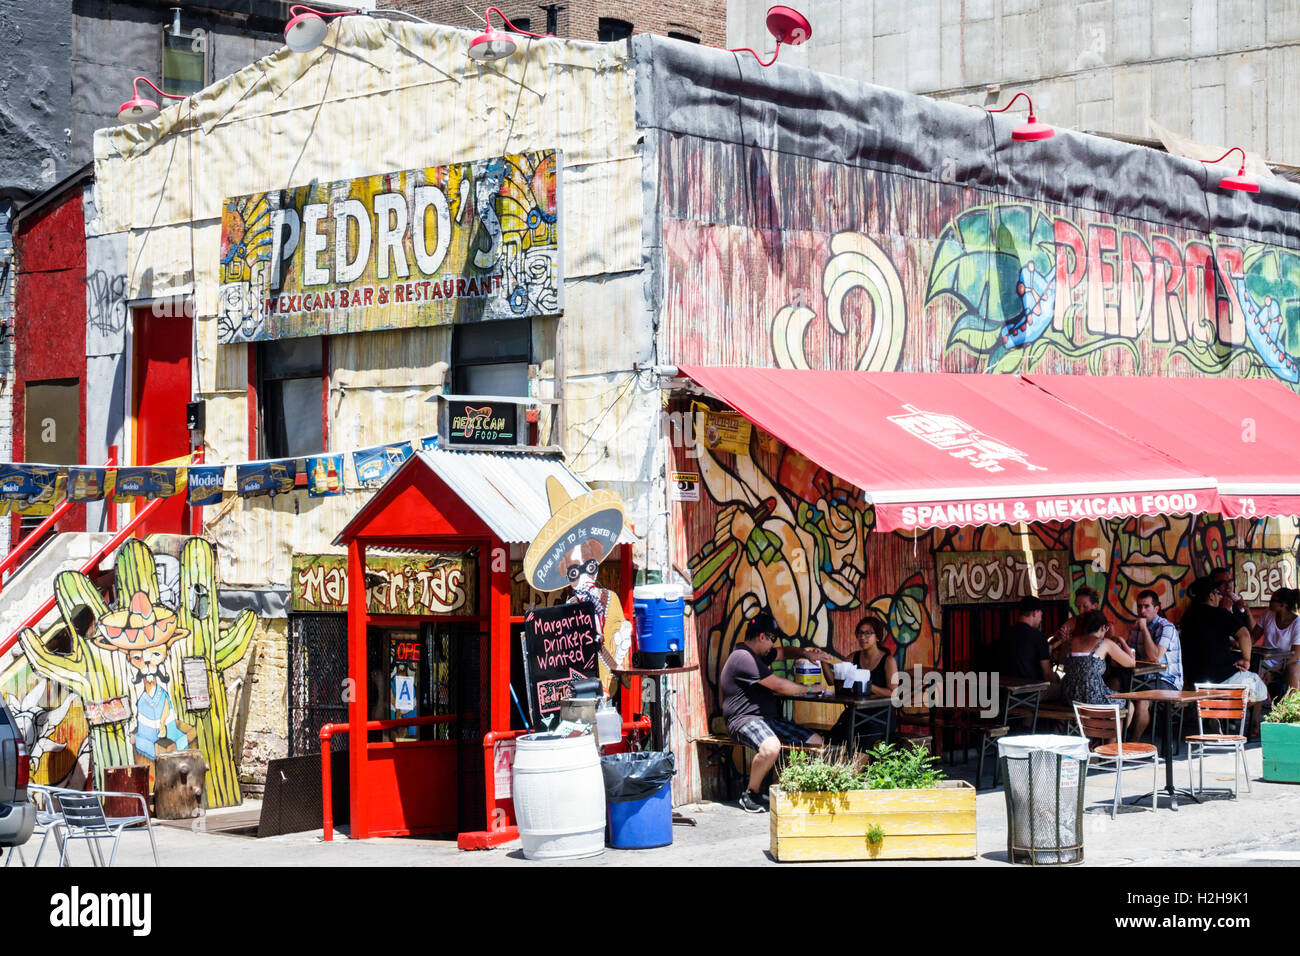 New York City,NY NYC Brooklyn,Dumbo,Front Street,Pedro's Mexican Bar & restaurant,exterior,graffiti art,outside exterior,dining food,sign,wood cutout, Stock Photo